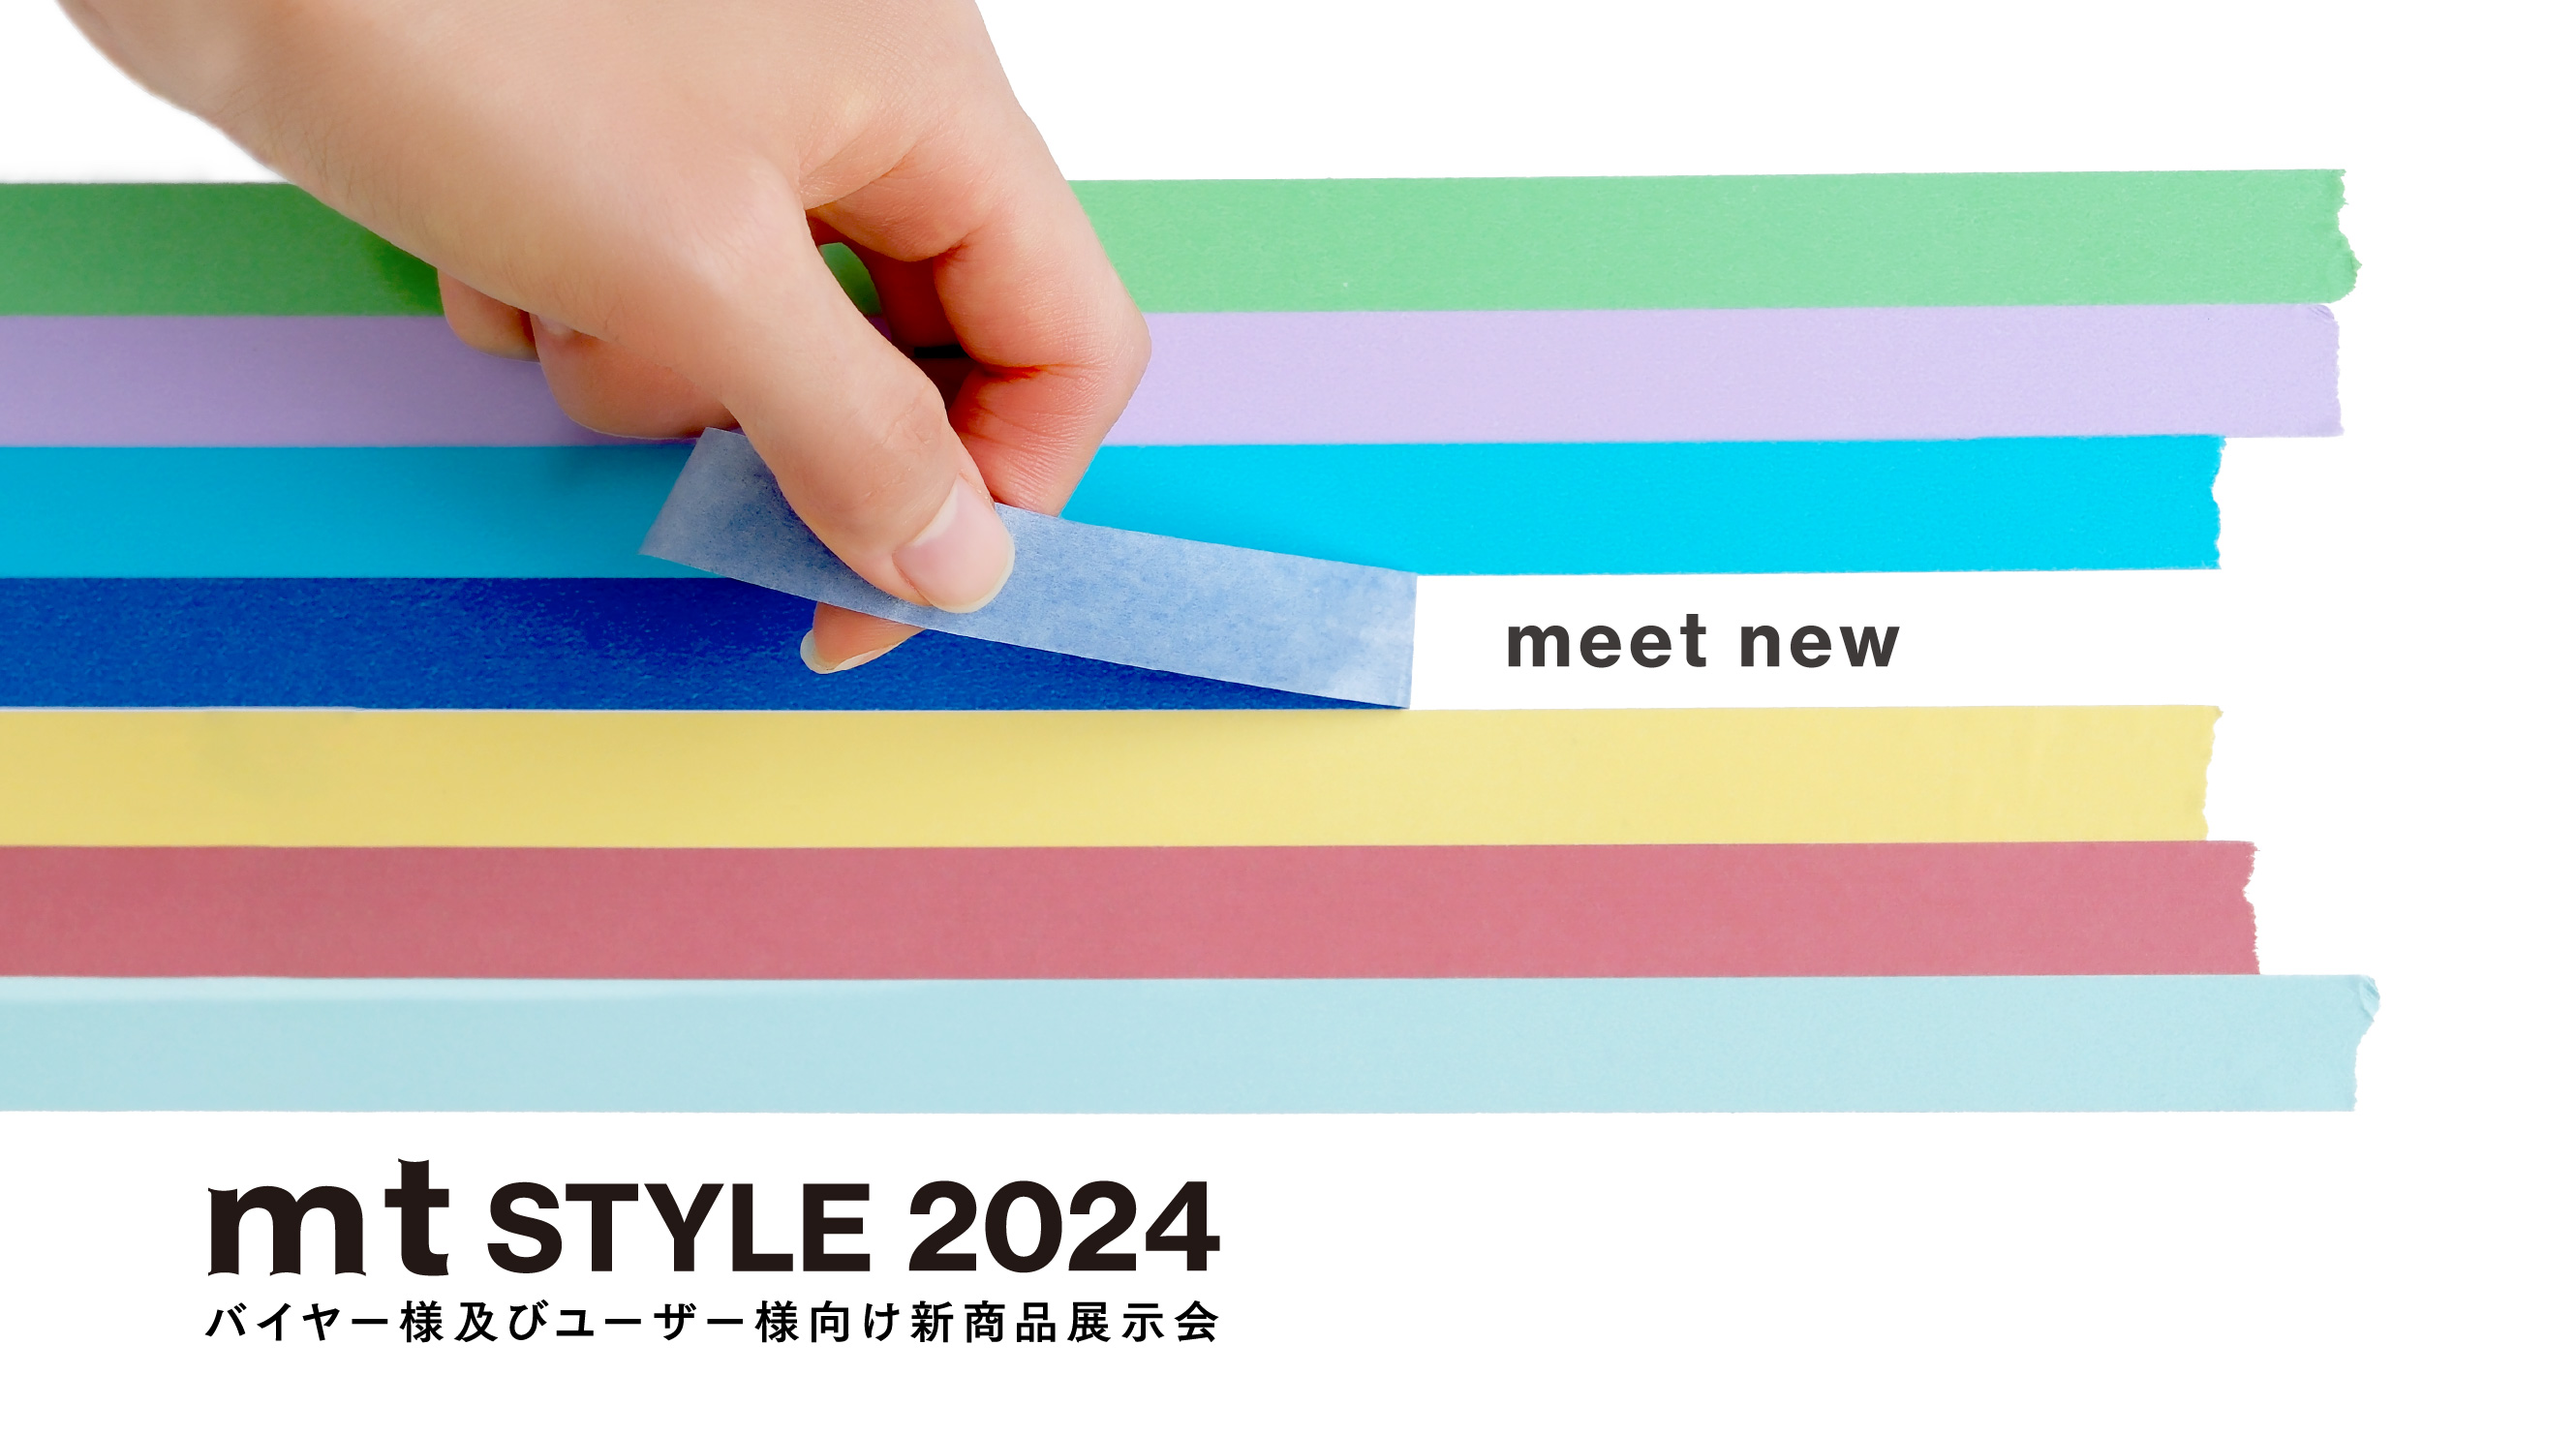 mt STYLE 2024 バイヤー様及び登録ユーザー向け新商品展示会